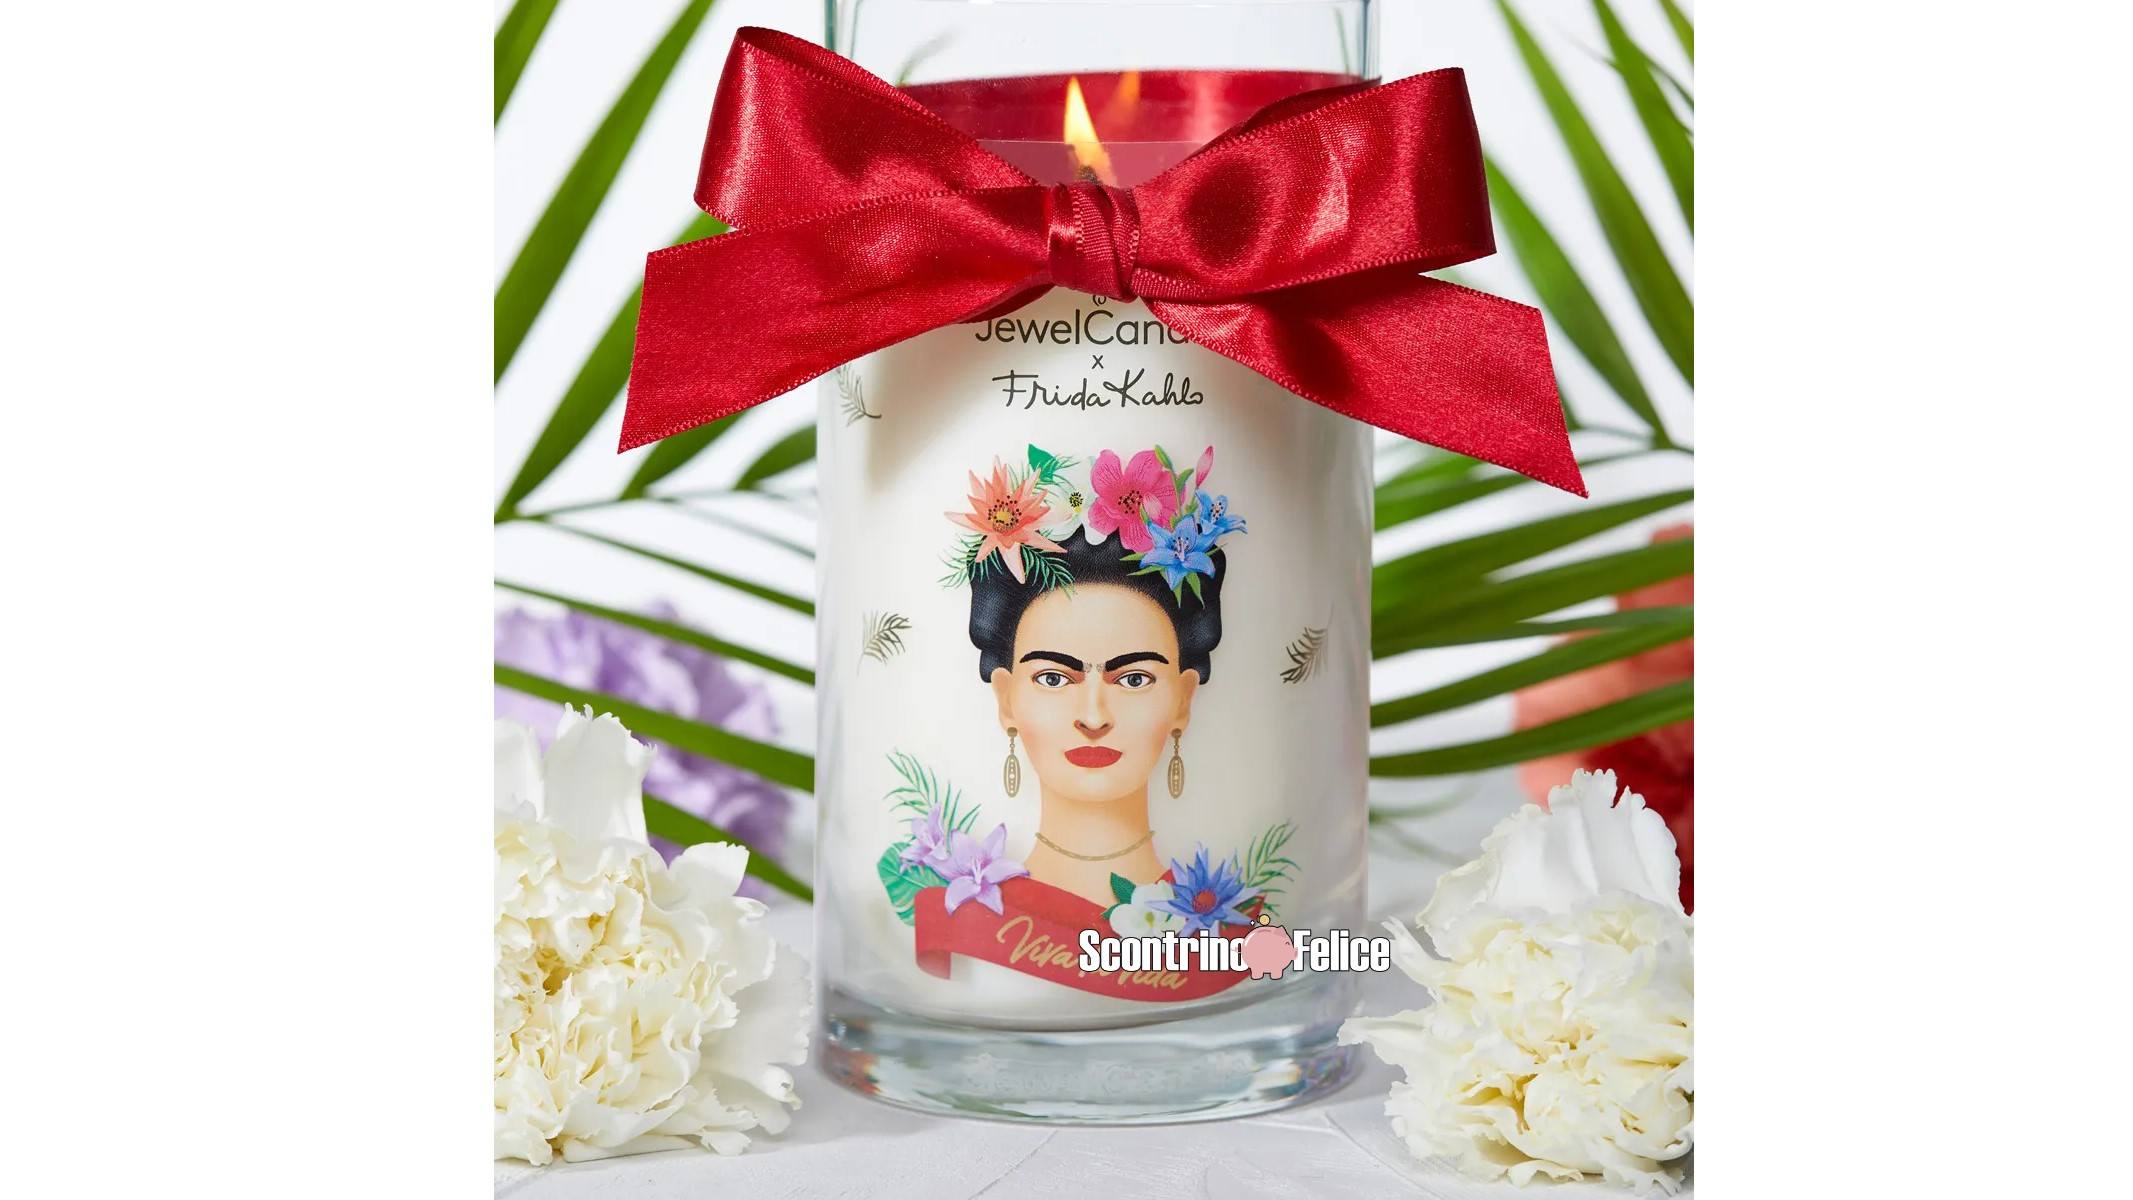 Vinci gratis la JewelCandle Viva la Vida di Frida Kahlo